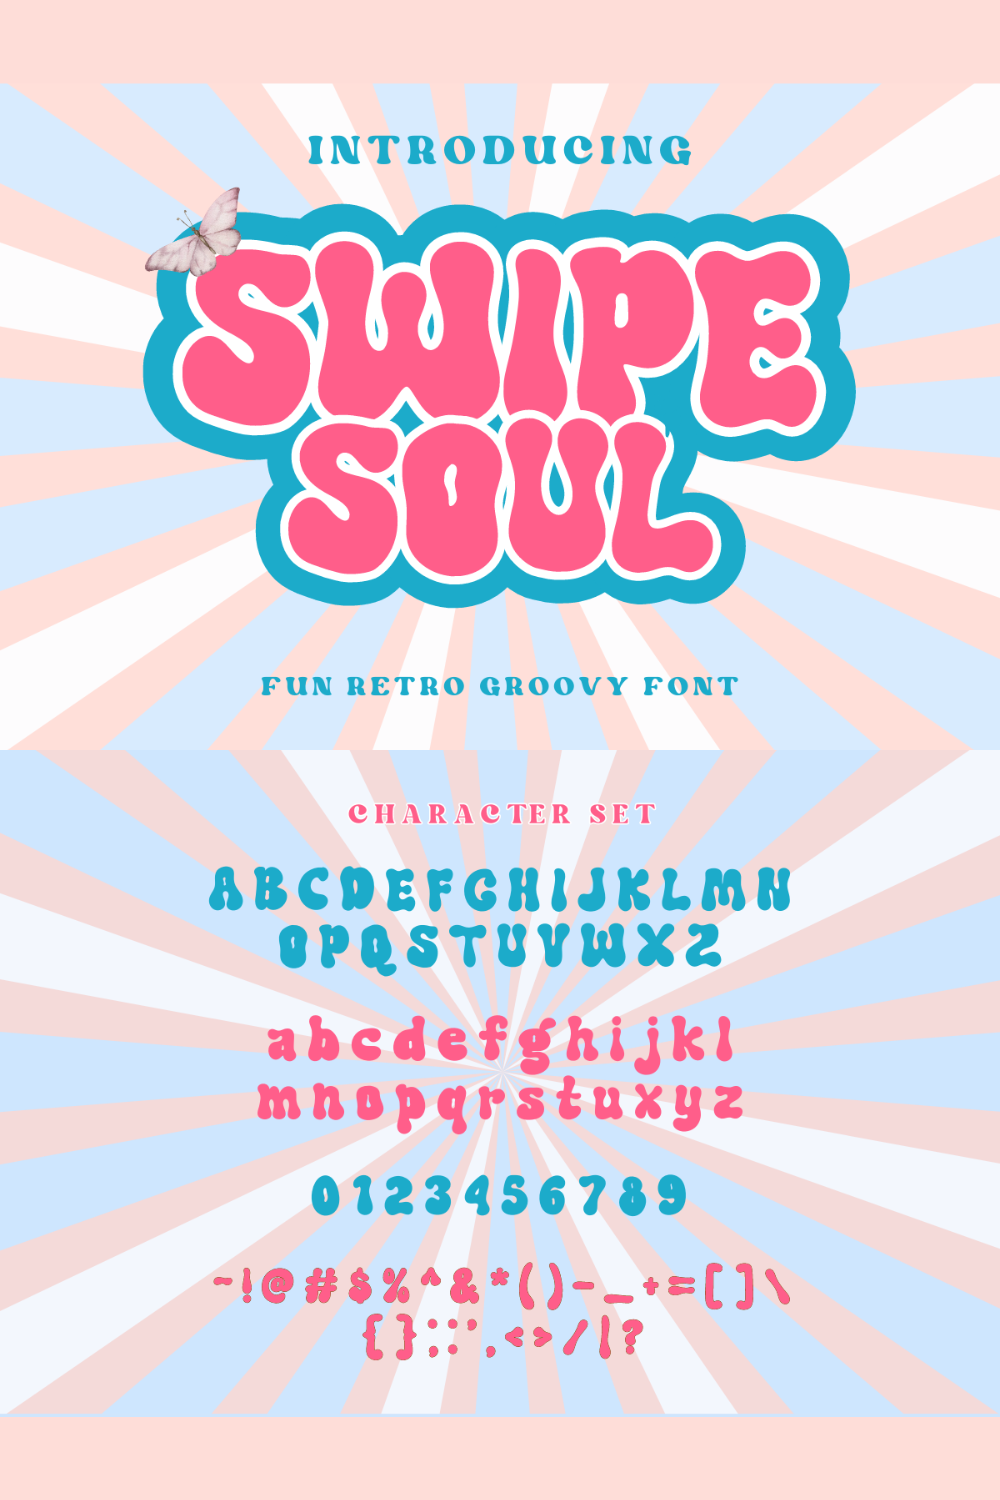 Swipe Soul - Fun Retro Groovy Font pinterest preview image.